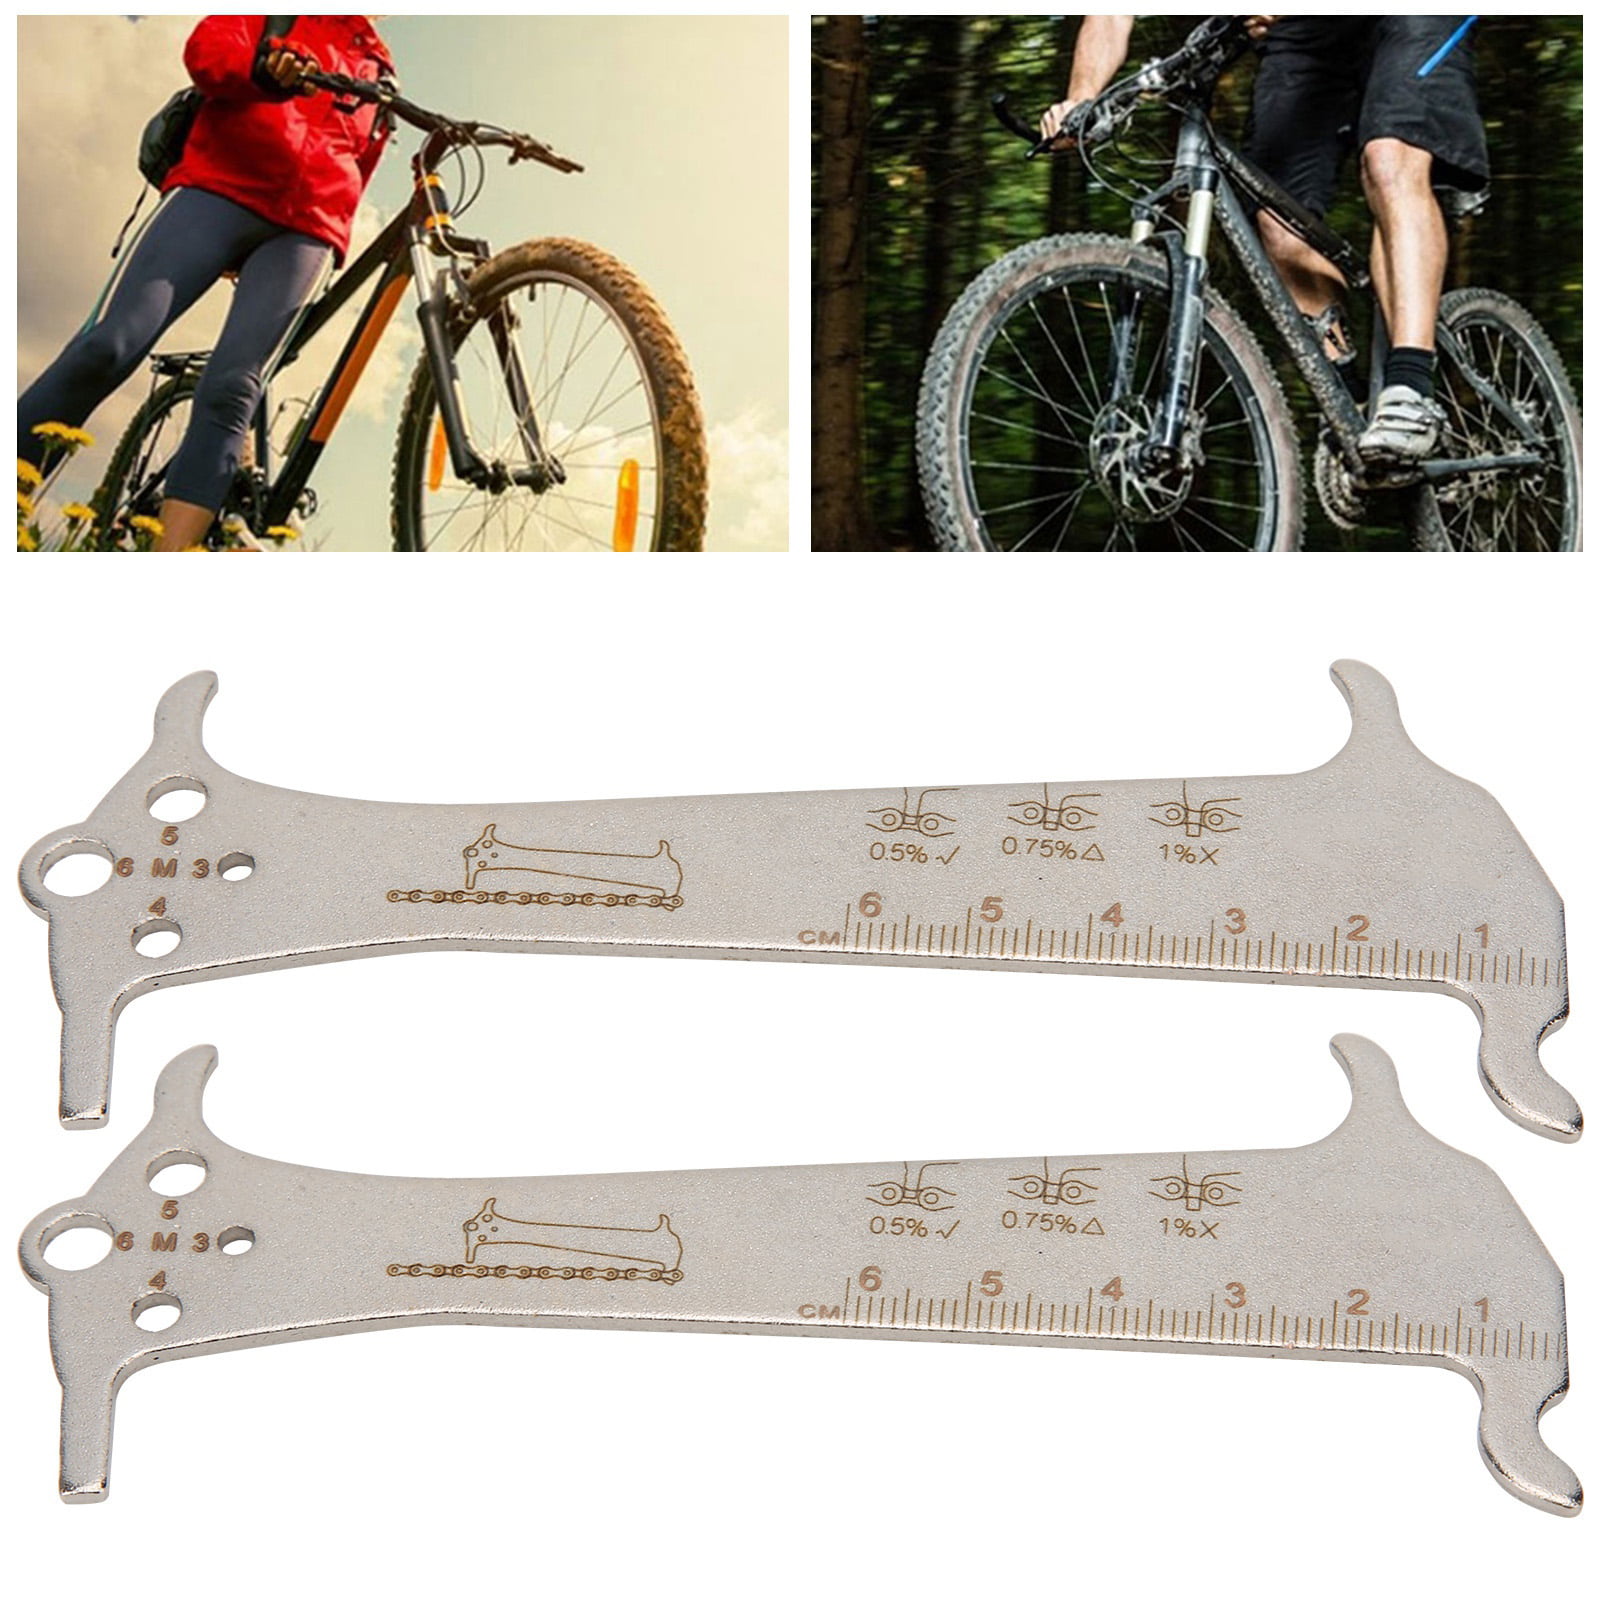 Bike Chain Wear Indicator Bicycle Chain Checker Bike Chain Measuring Ruler for Checking Chain of Mountain Bike Folding Bicycle Road Bike